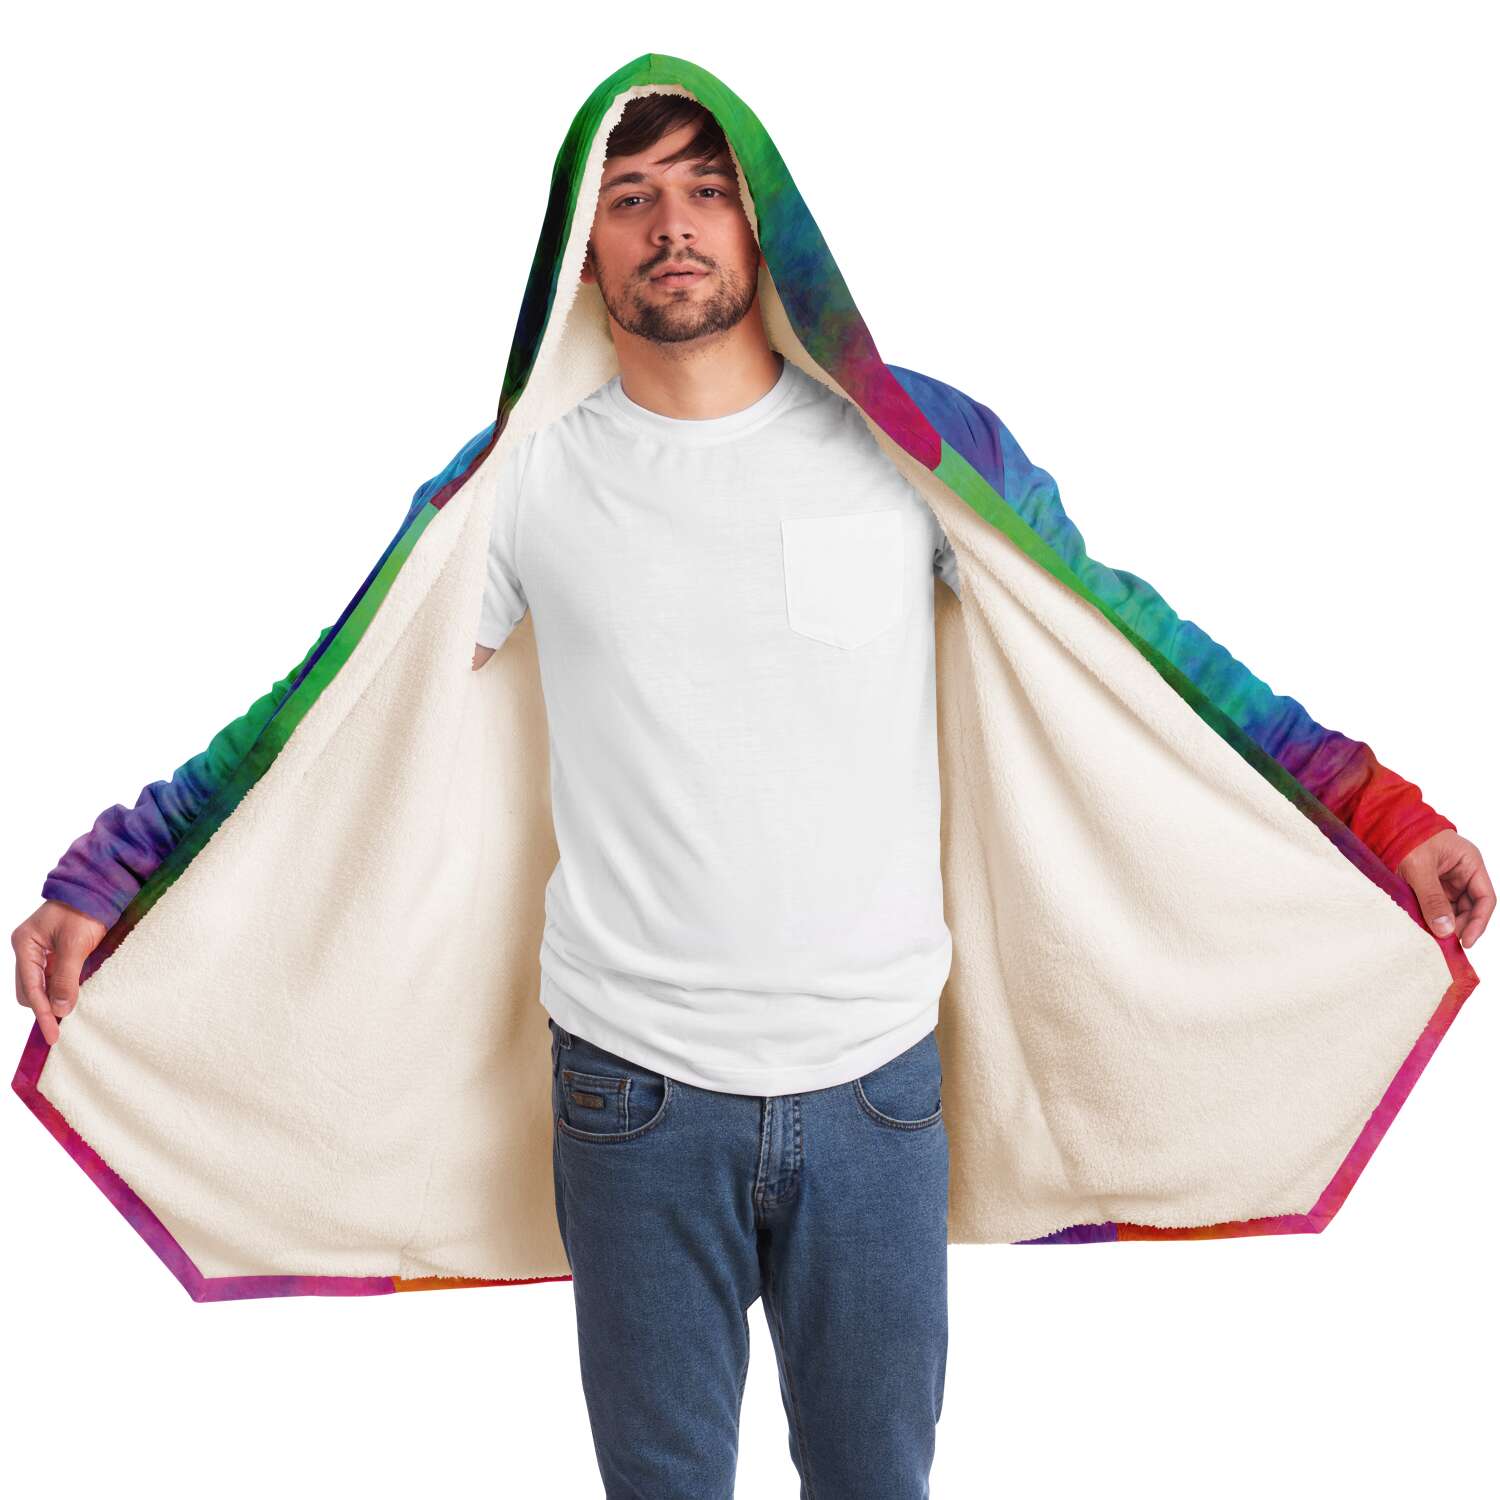 Color Cloud Cloak with Hood and Pockets - Custom